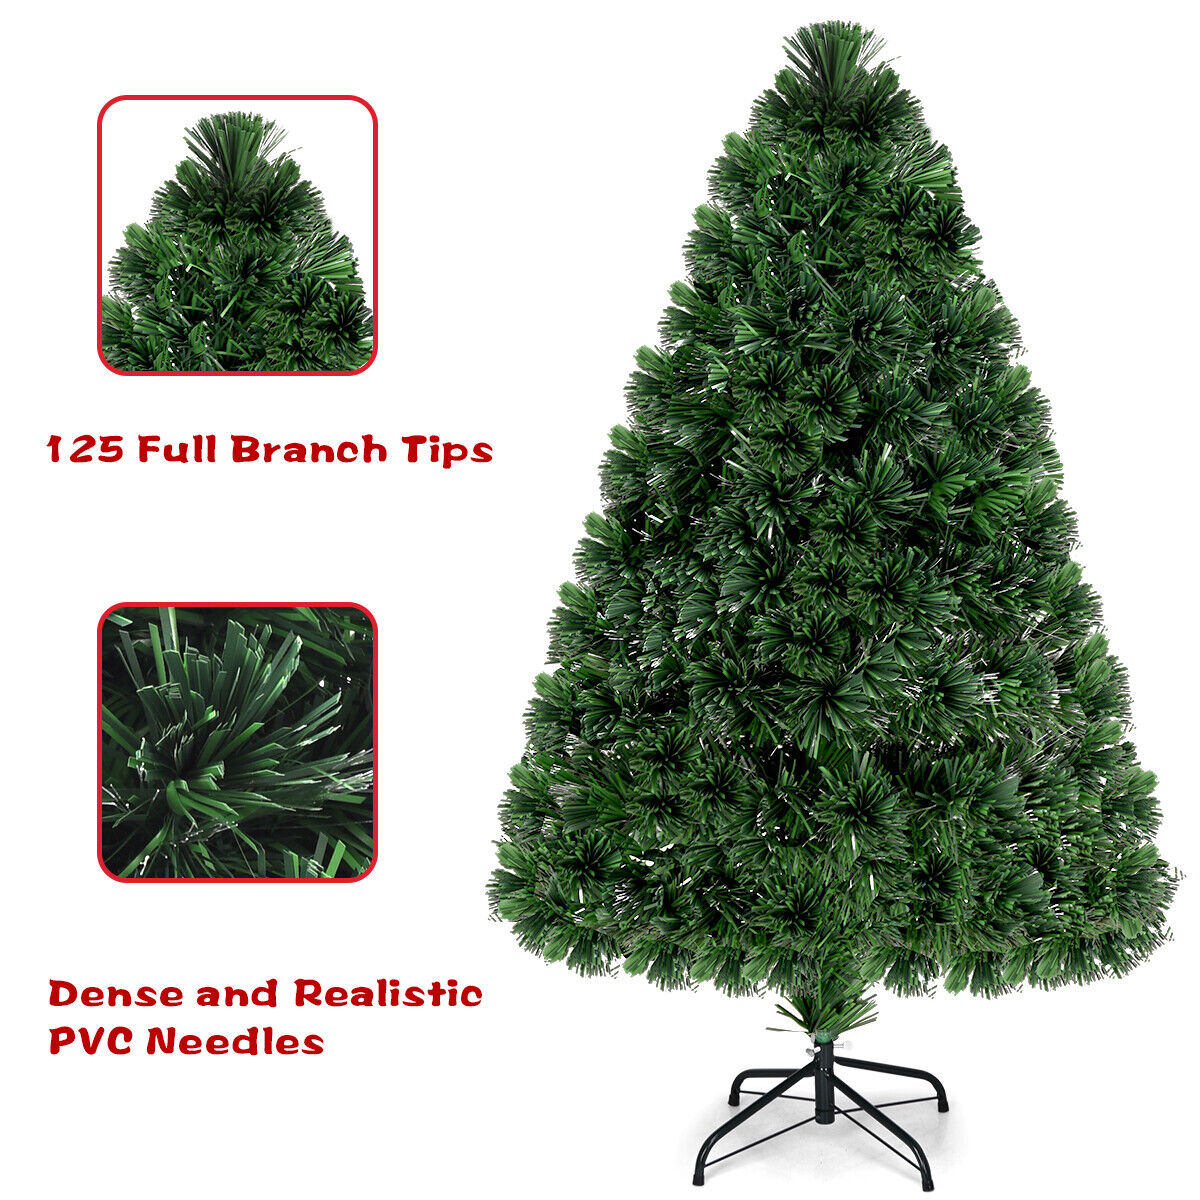 4ft Pre-lit Fiber Optic PVC Christmas Tree with Metal Stand